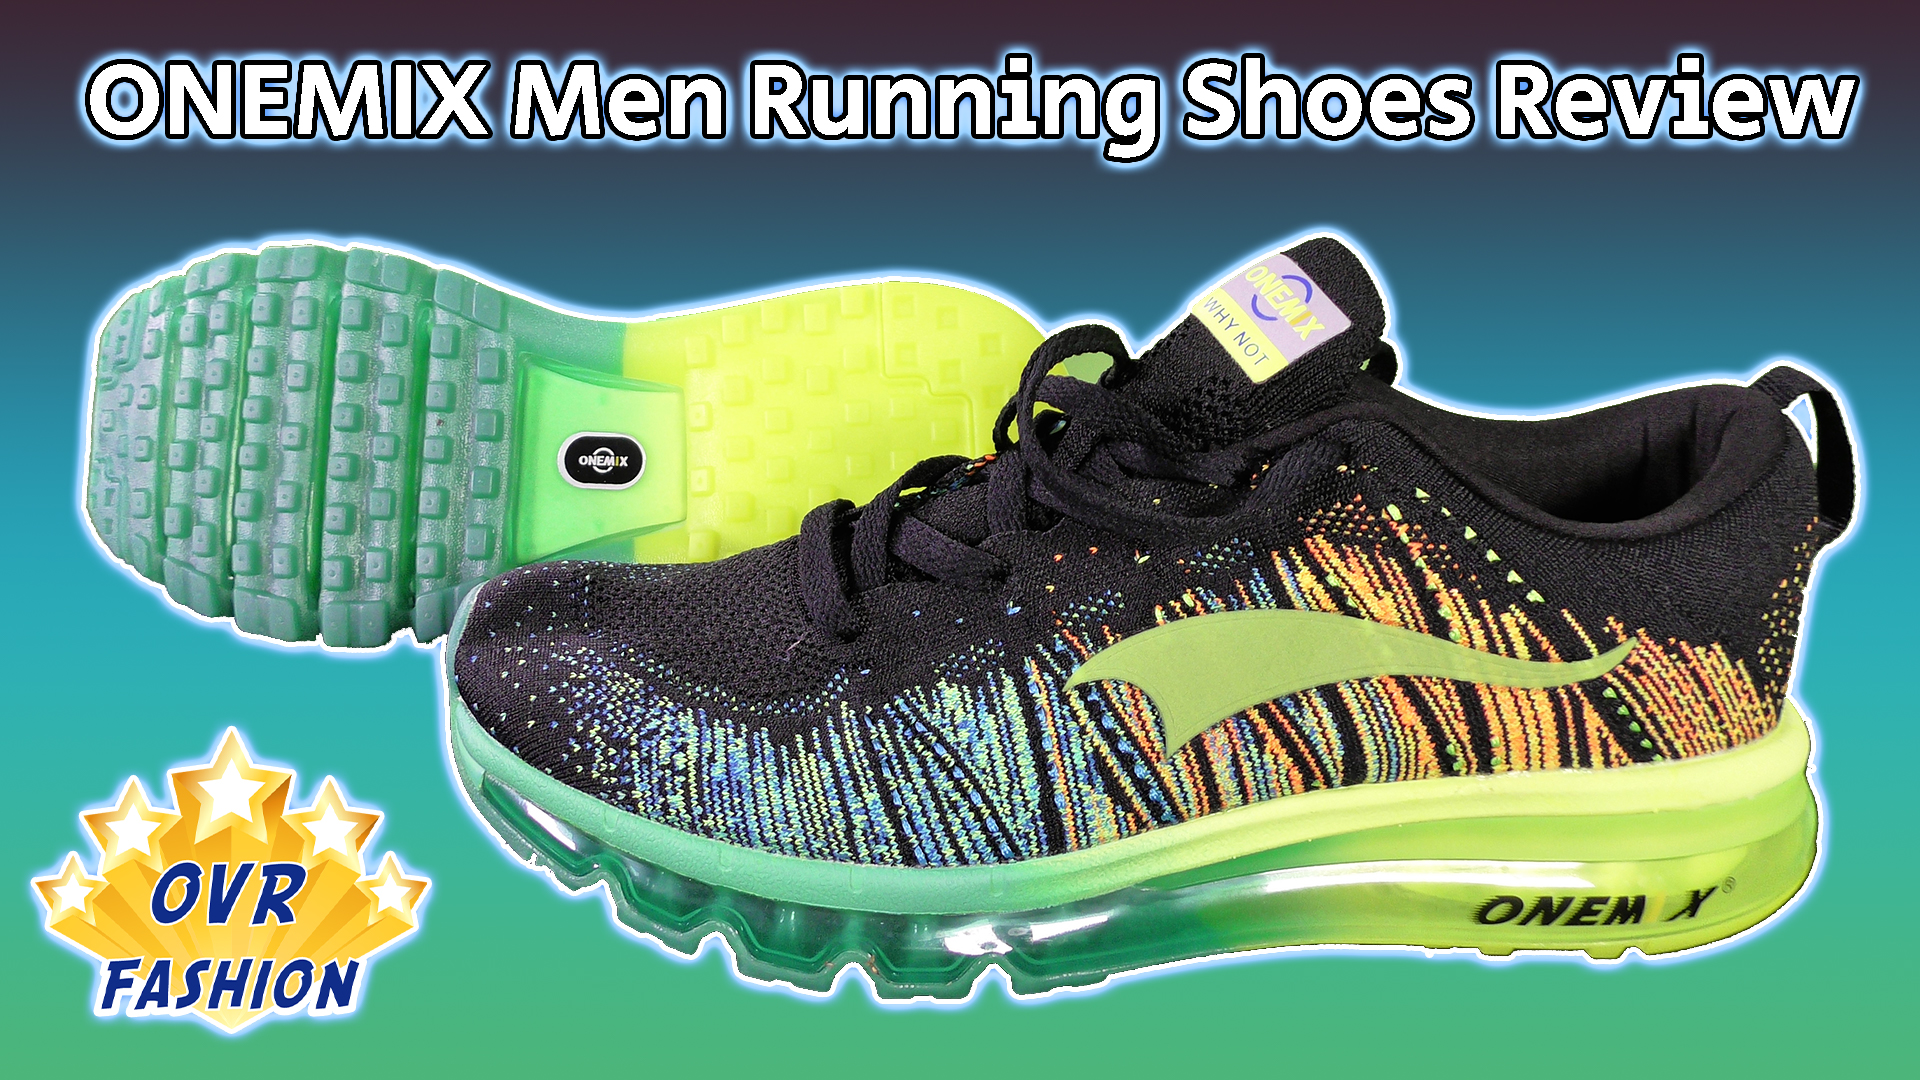 Parpadeo entusiasta Punto de referencia ONEMIX Men Running Shoes (Review) - Original Video Reviews